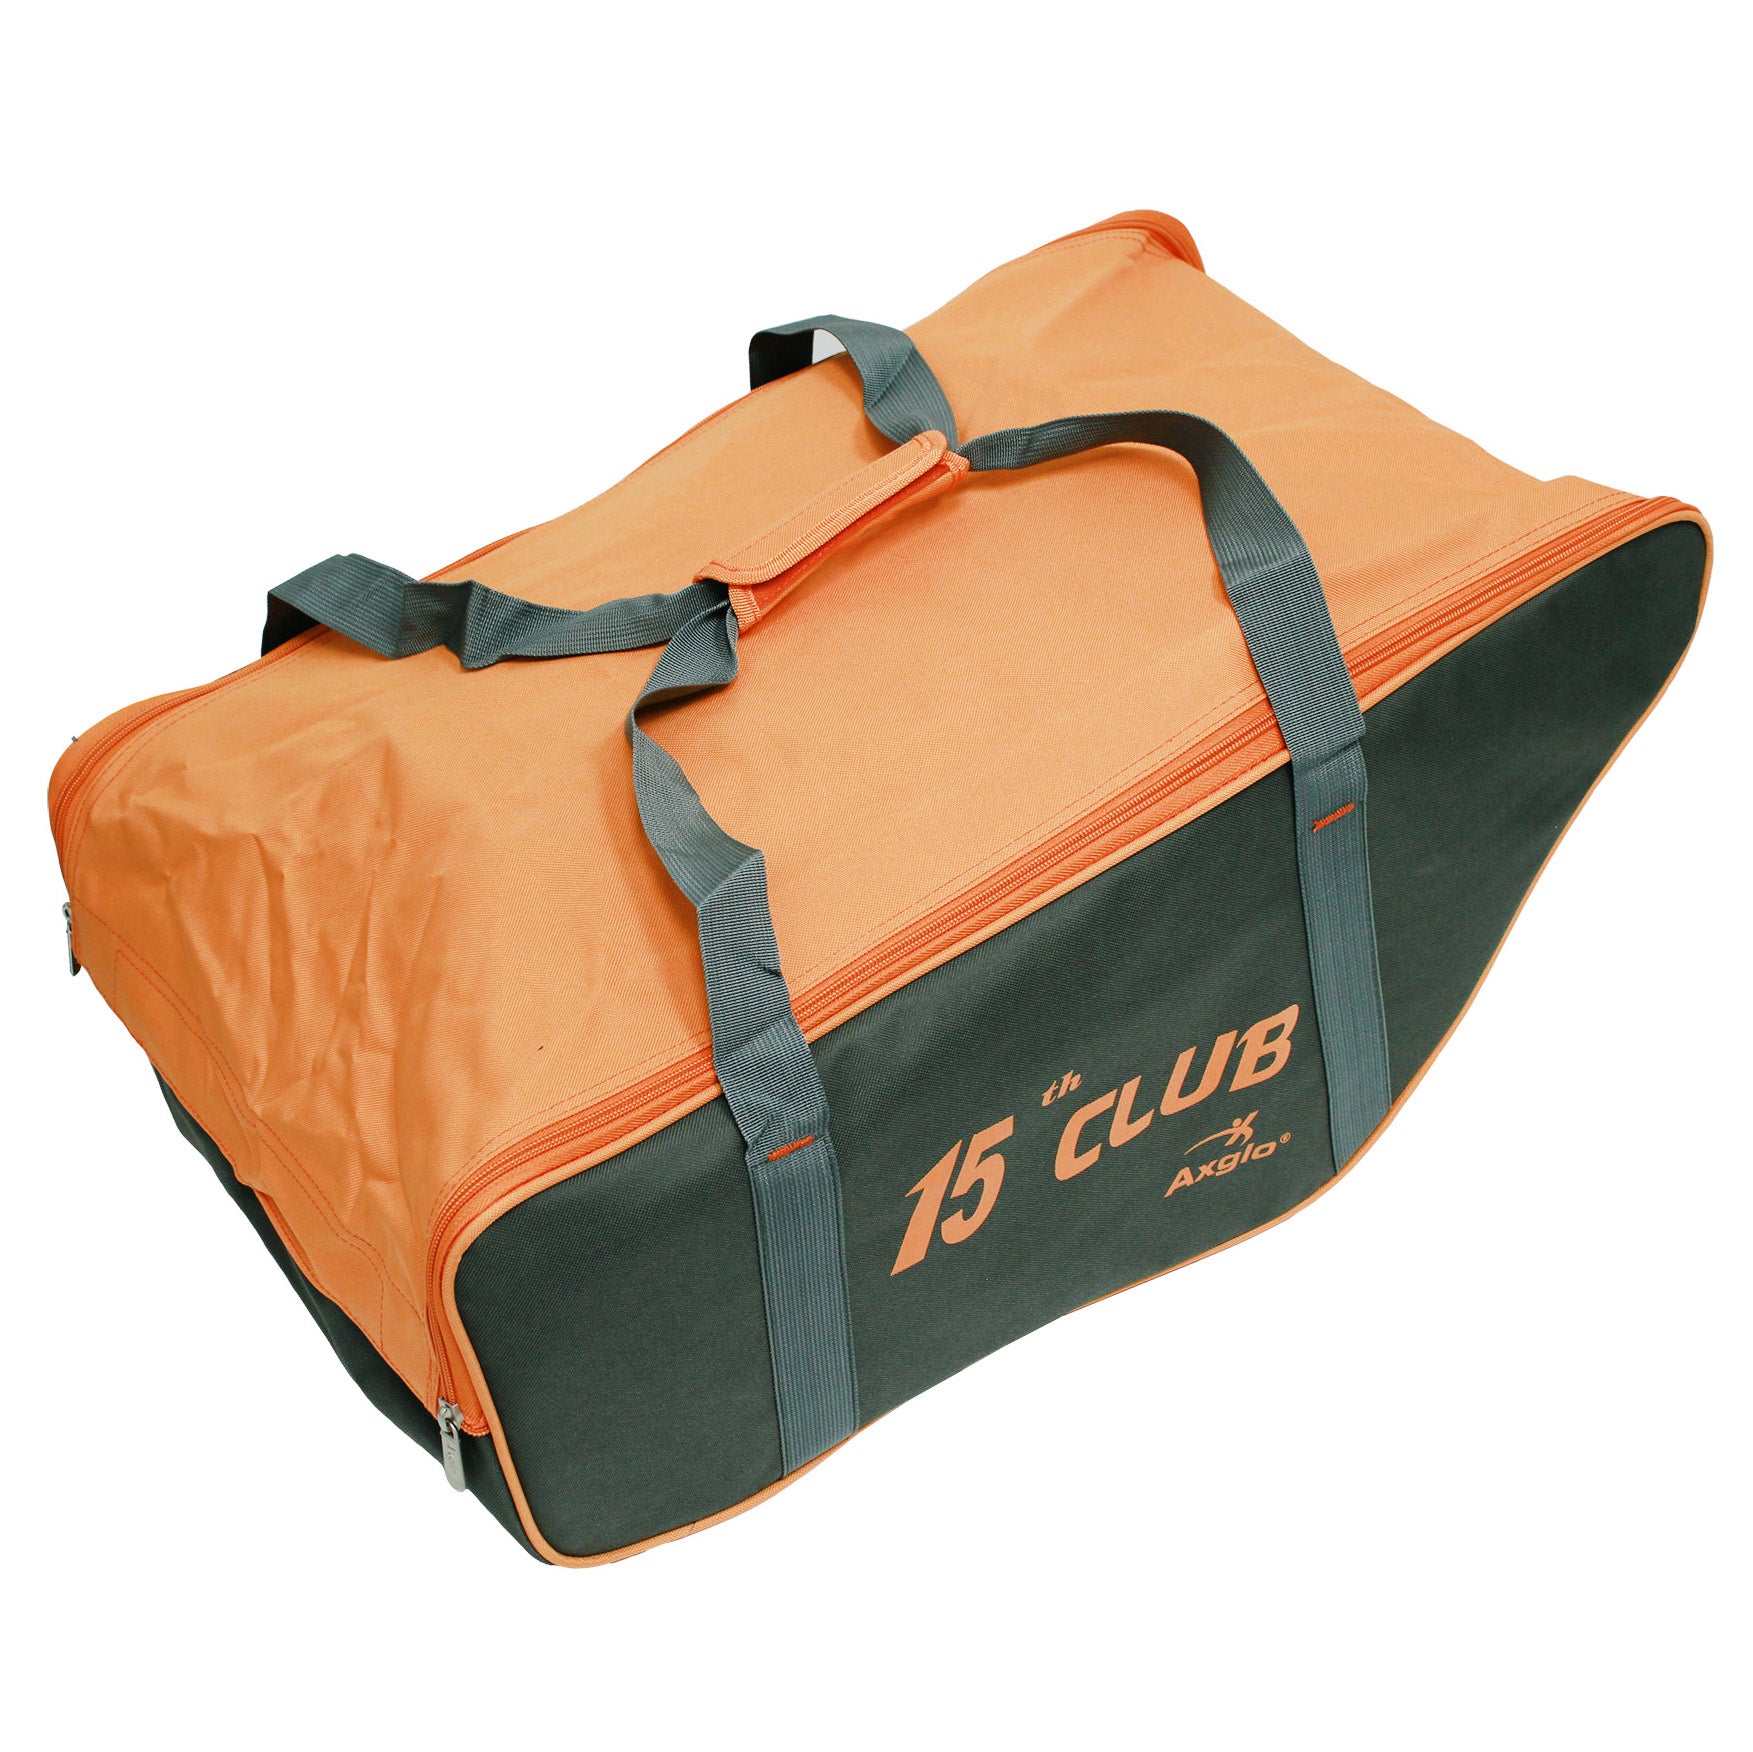 15th Club Storage Bag